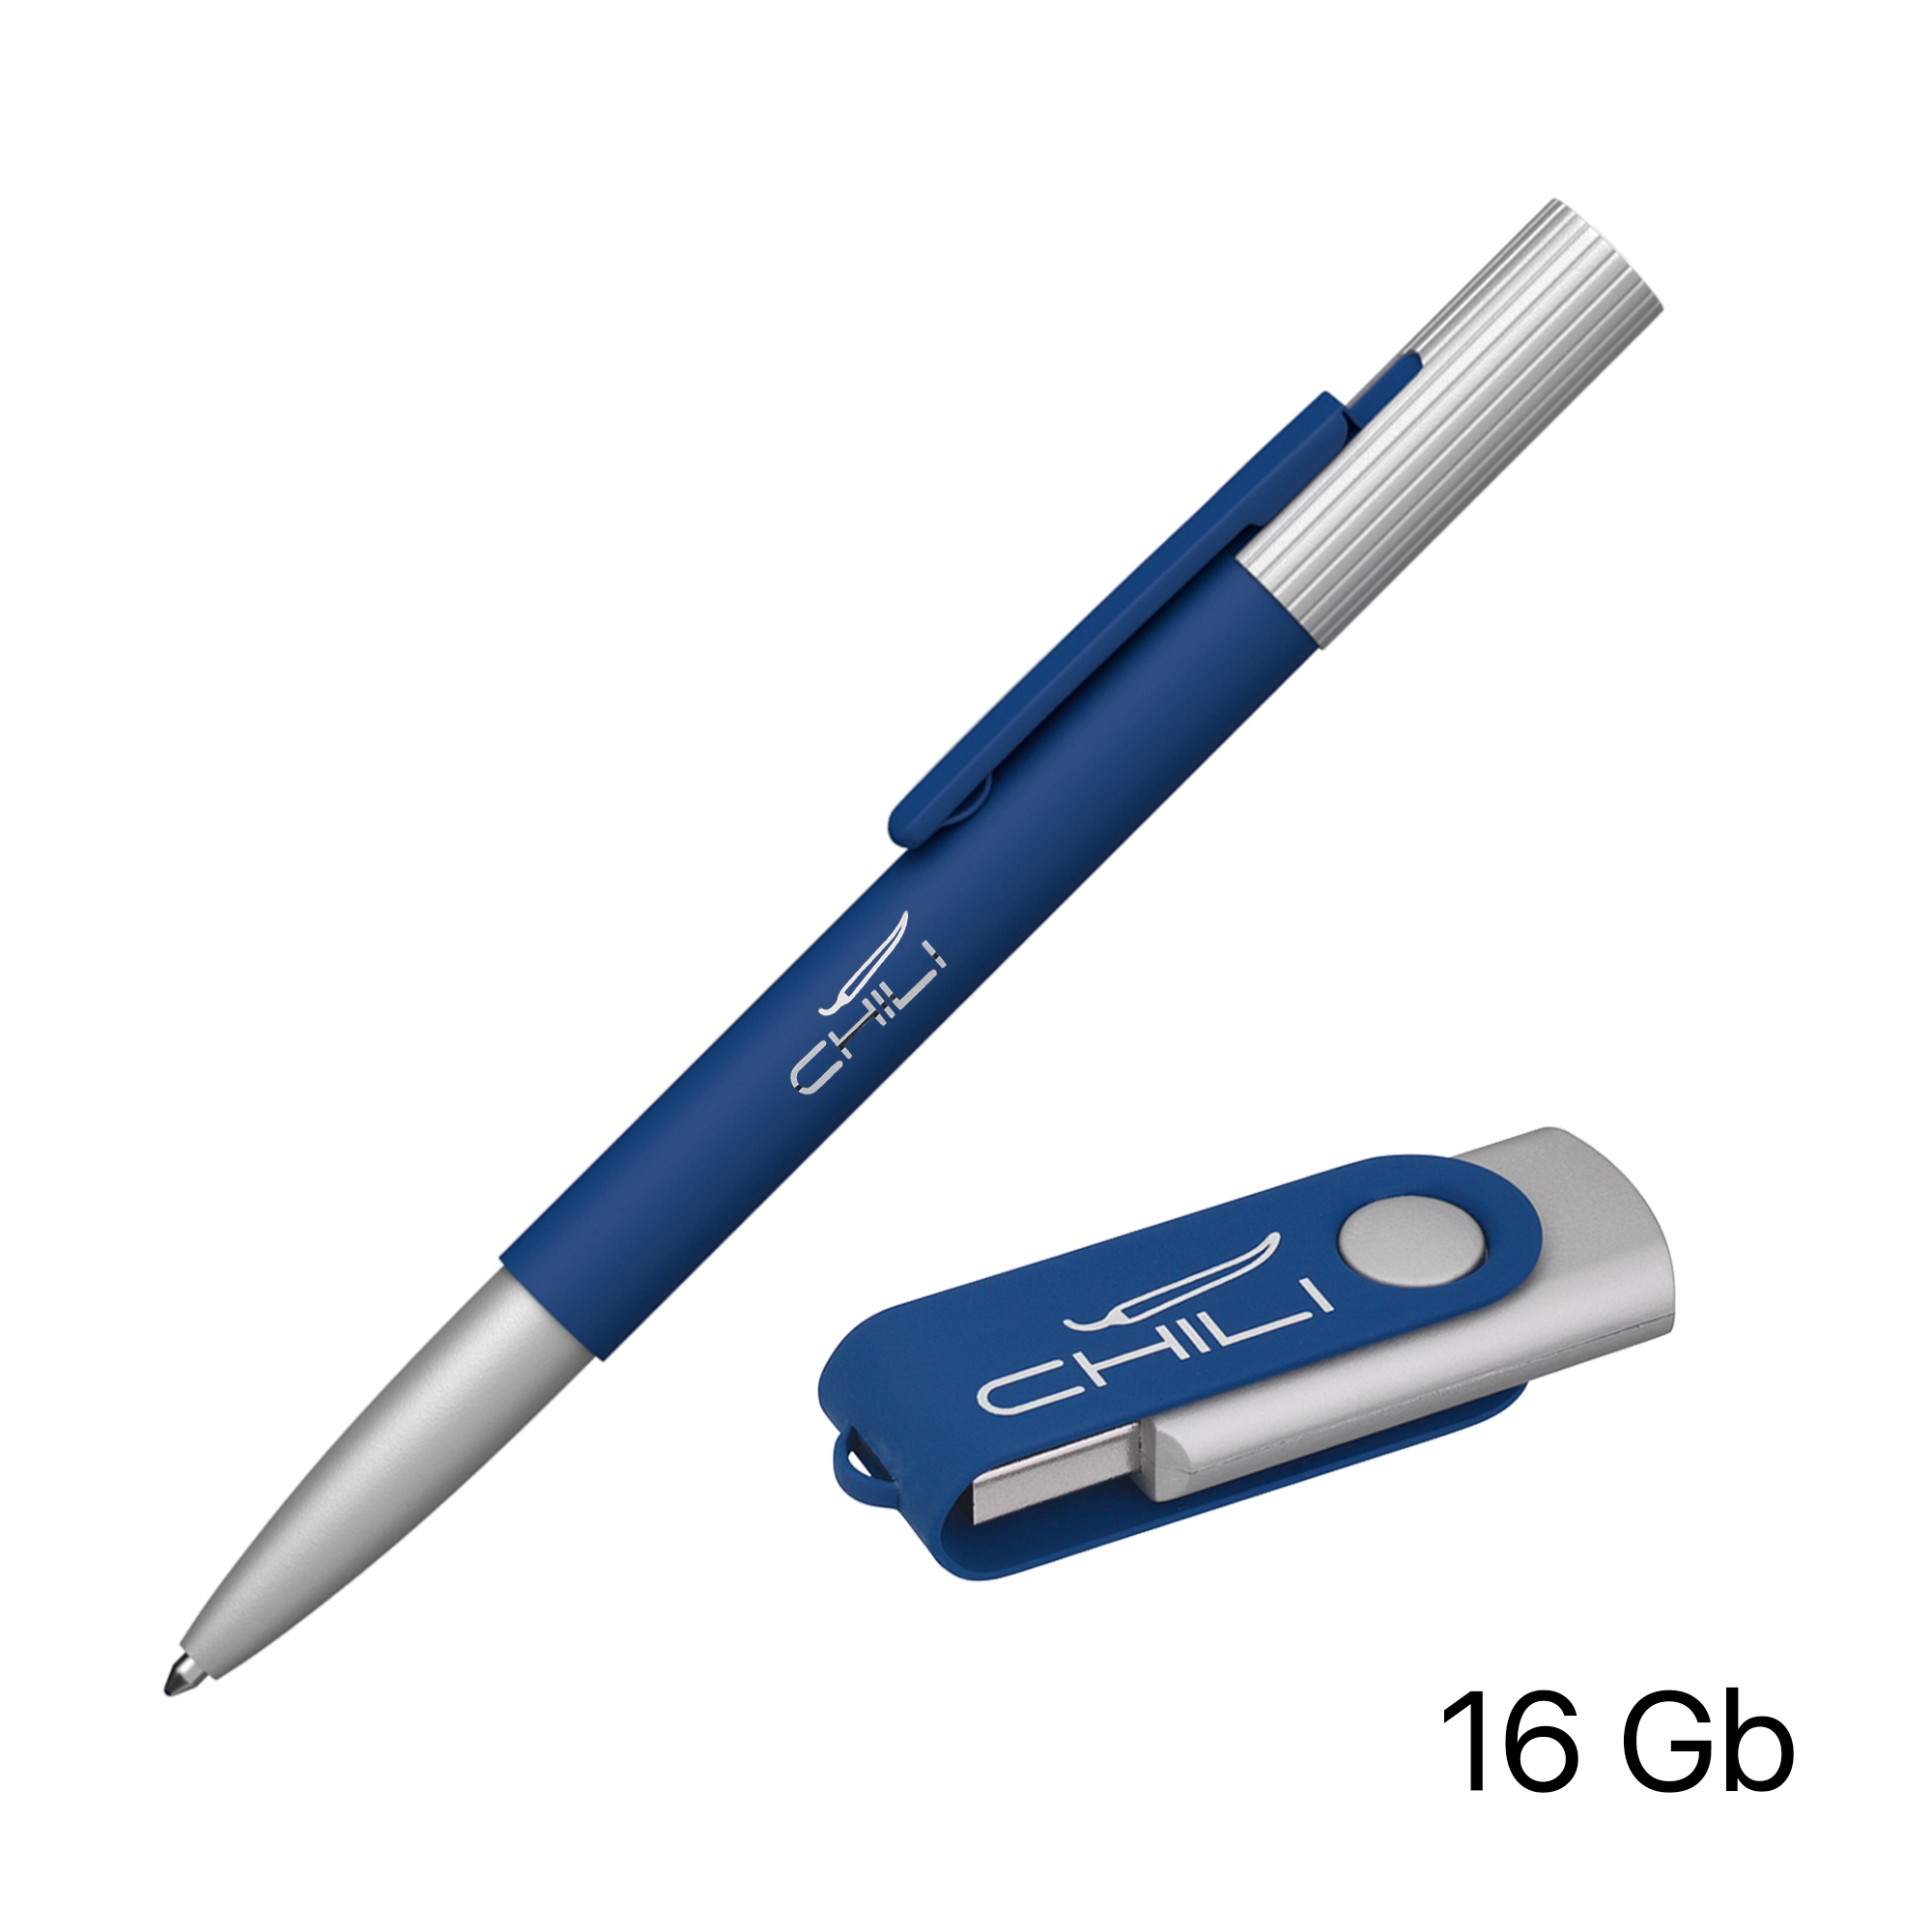 Набор ручка "Clas" + флеш-карта "Vostok" 16 Гб в футляре, покрытие soft touch, синий, металл/пластик/soft touch